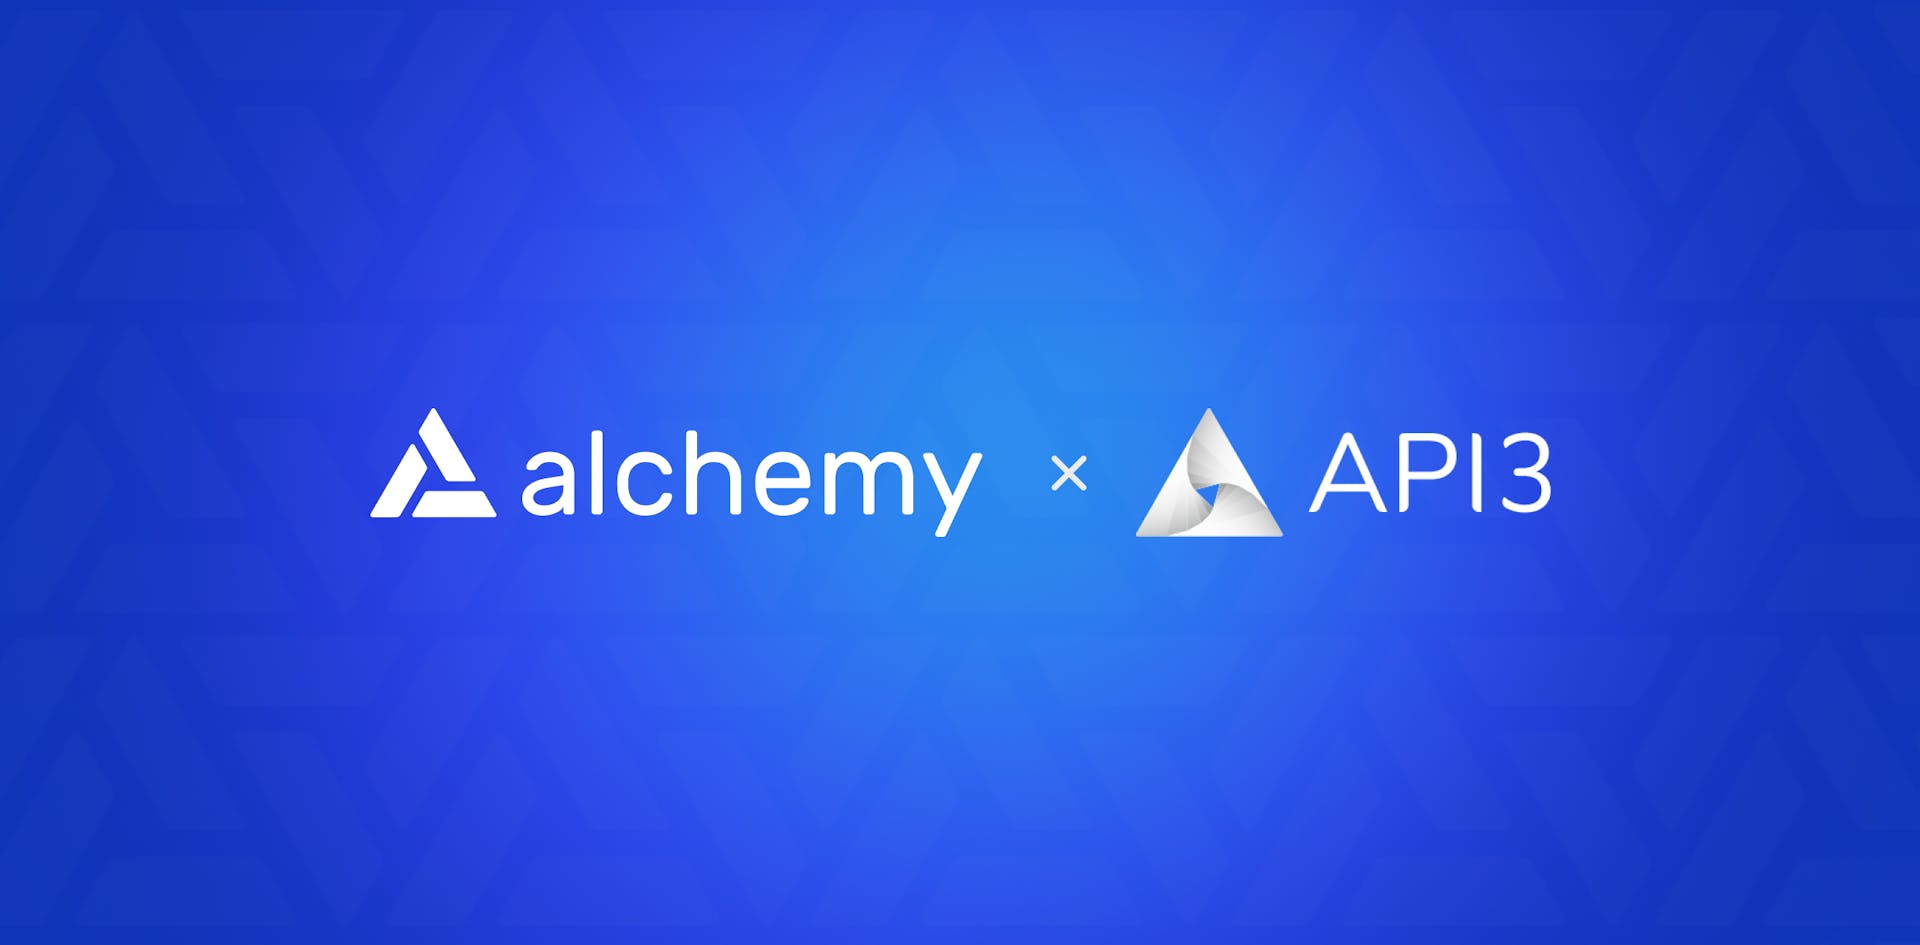 API3 Partners with Alchemy to Enable the Web3 API3 Economy thumbnail